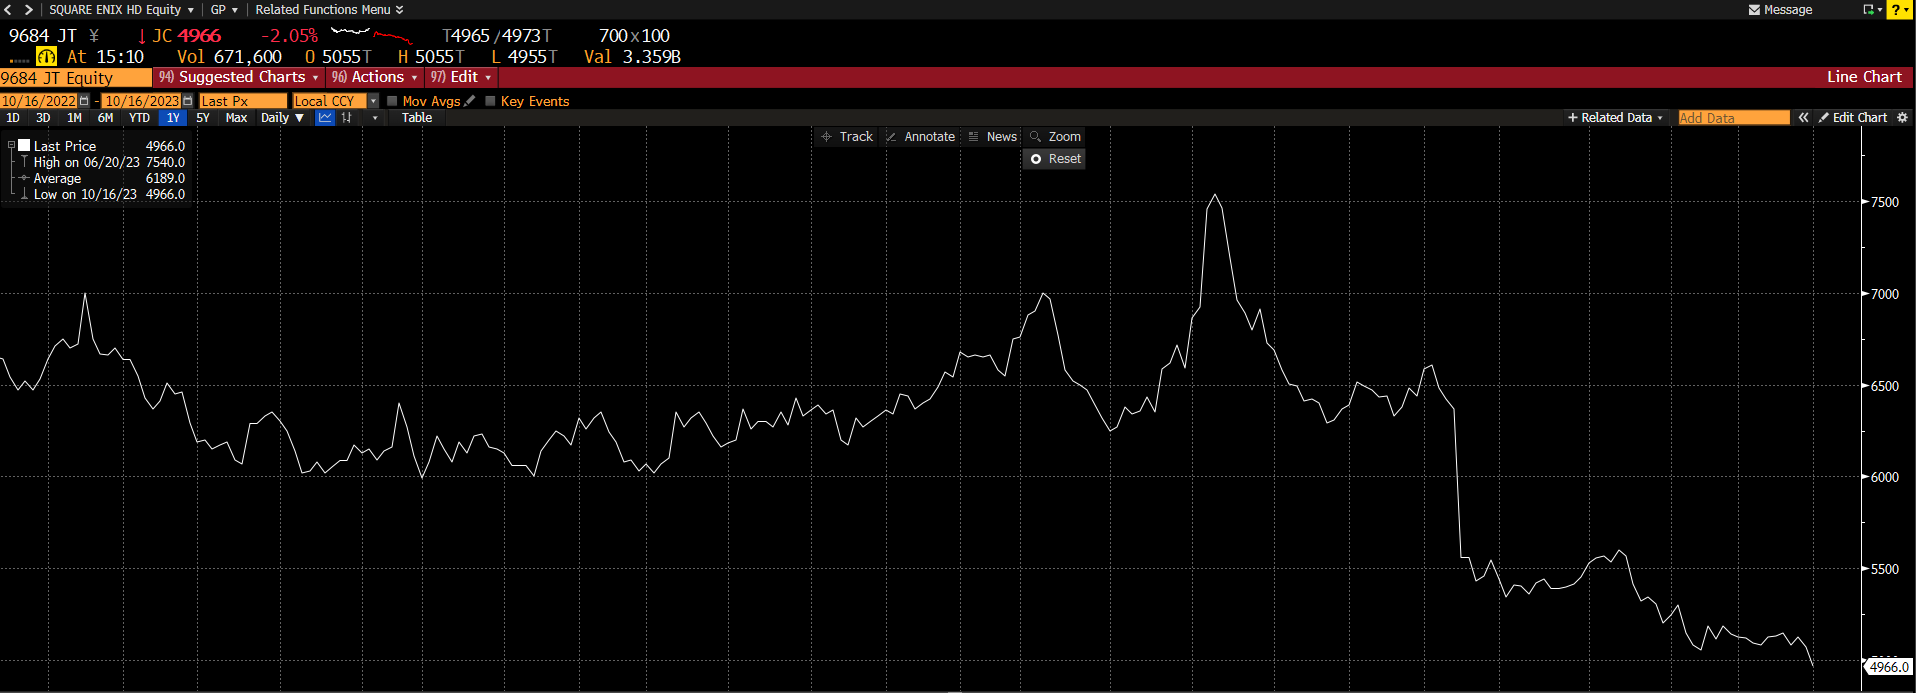 SE陷入困境股价跌破5000日元 近三年历史最低点